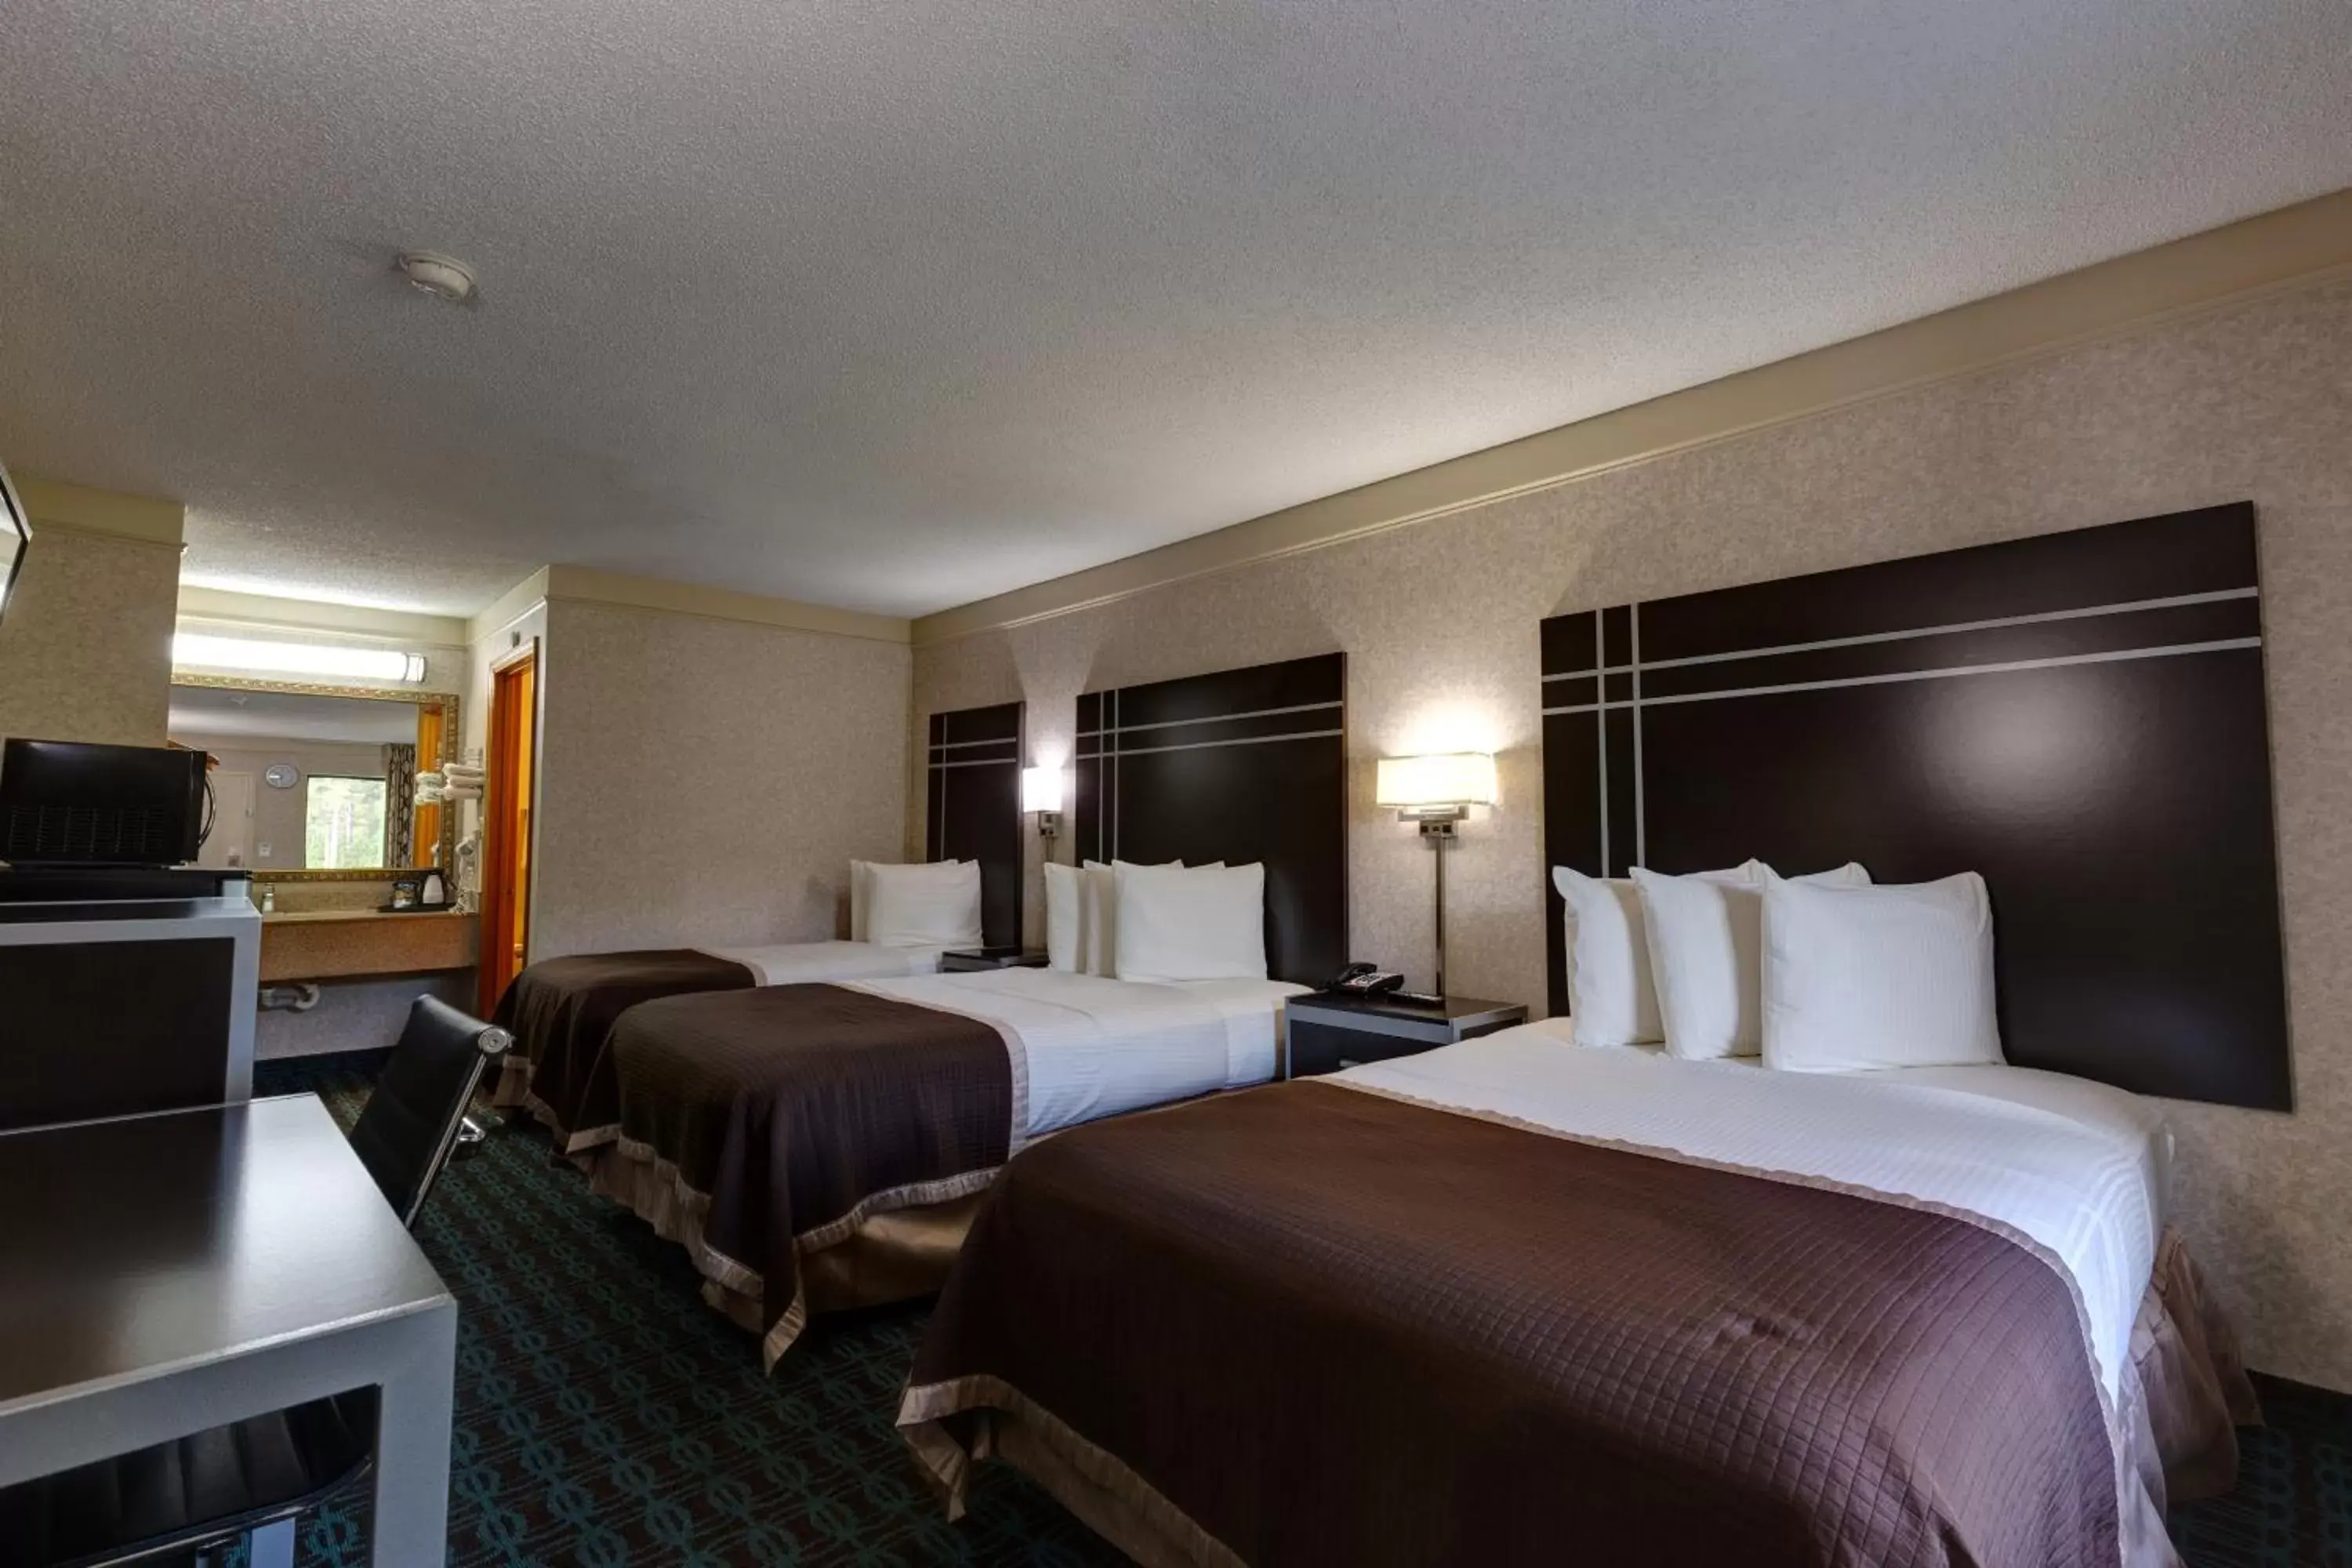 Bed, Room Photo in Deluxe Inn - Fayetteville I-95